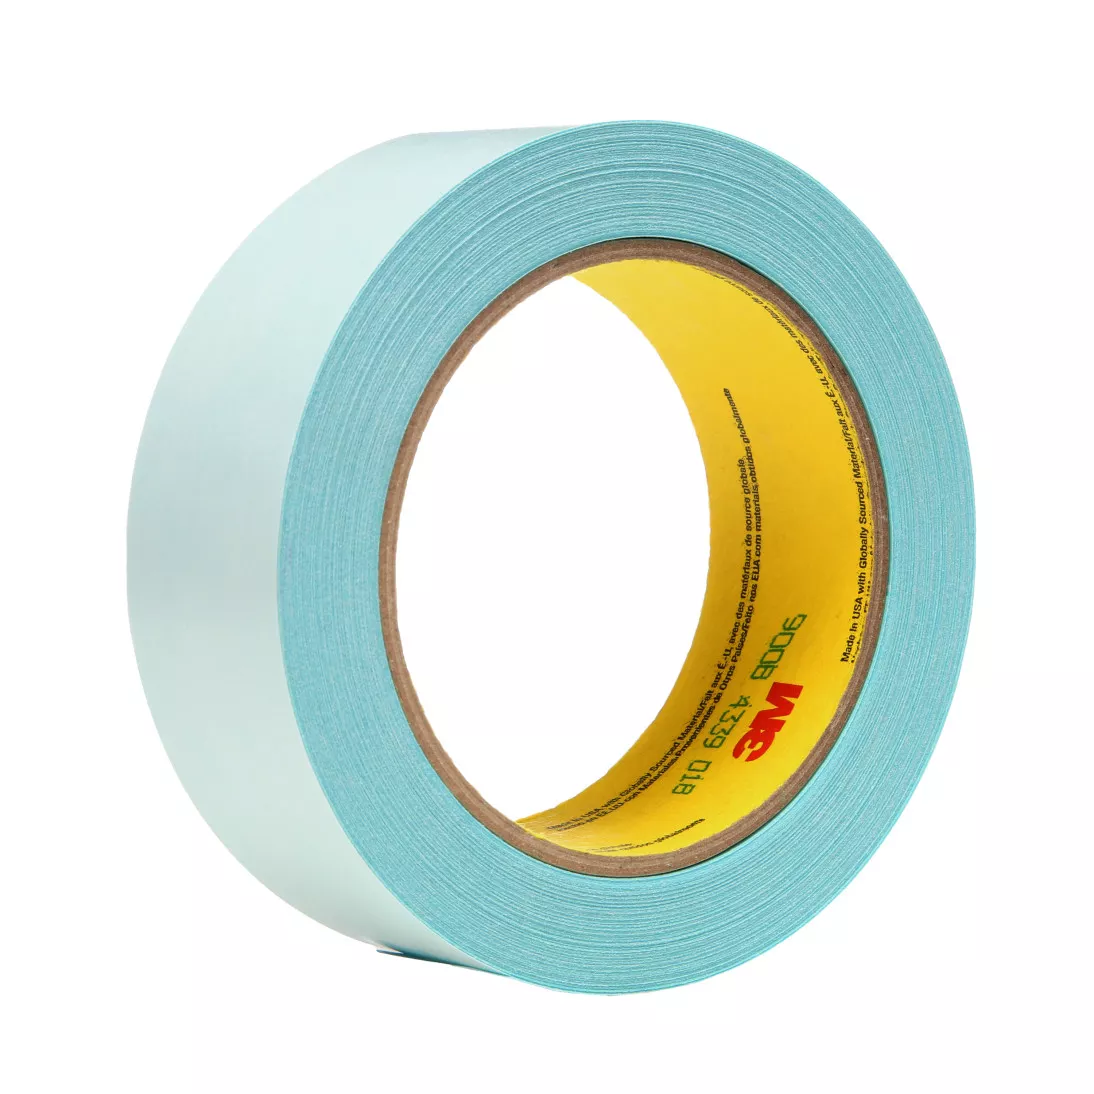 3M™ Repulpable Double Coated Splicing Tape 900B, Blue, 18 mm x 33 m, 2.5
mil, 48 rolls per case (1 per inner)